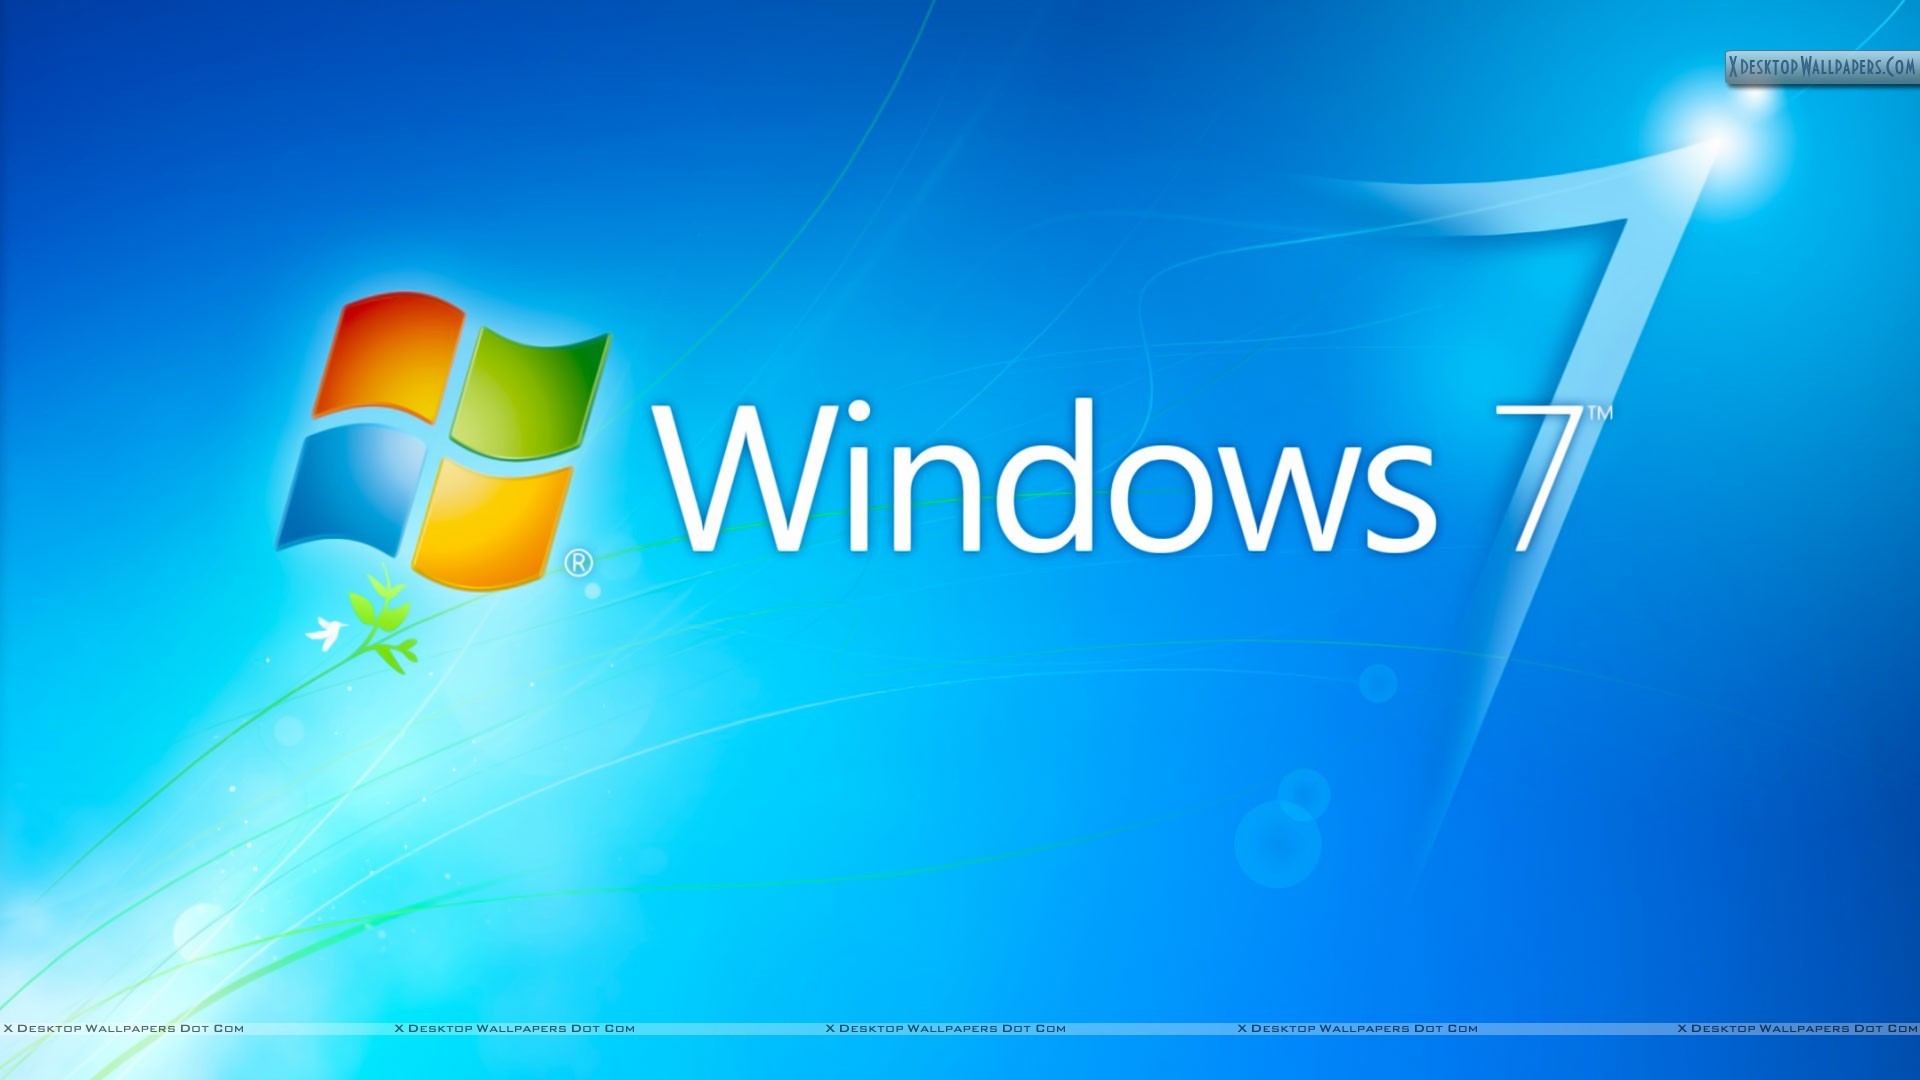 Windows 7 Wallpaper Download Hd 1920x1080 Wallpaper Teahub Io